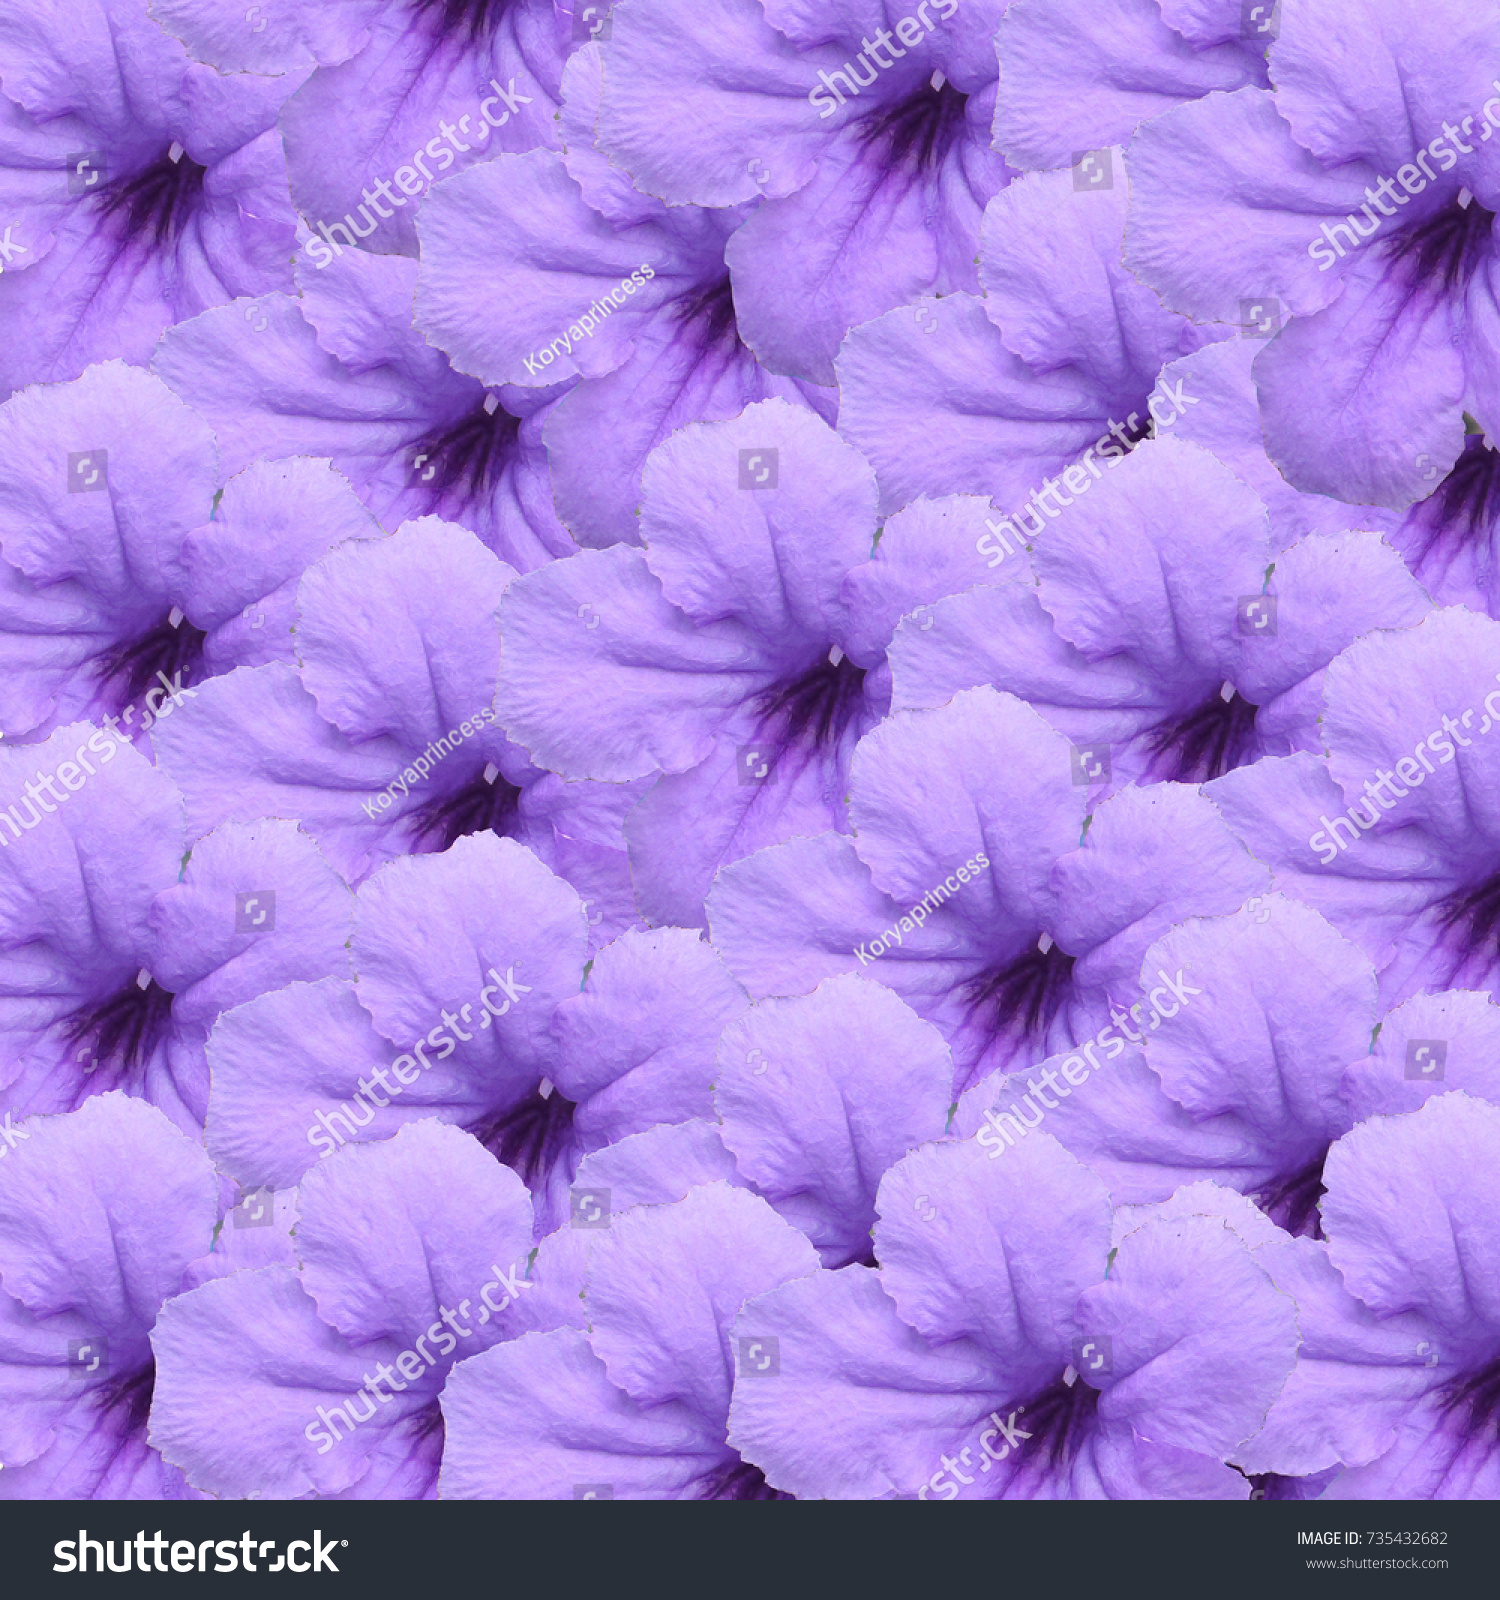 Wallpaper purple pastel